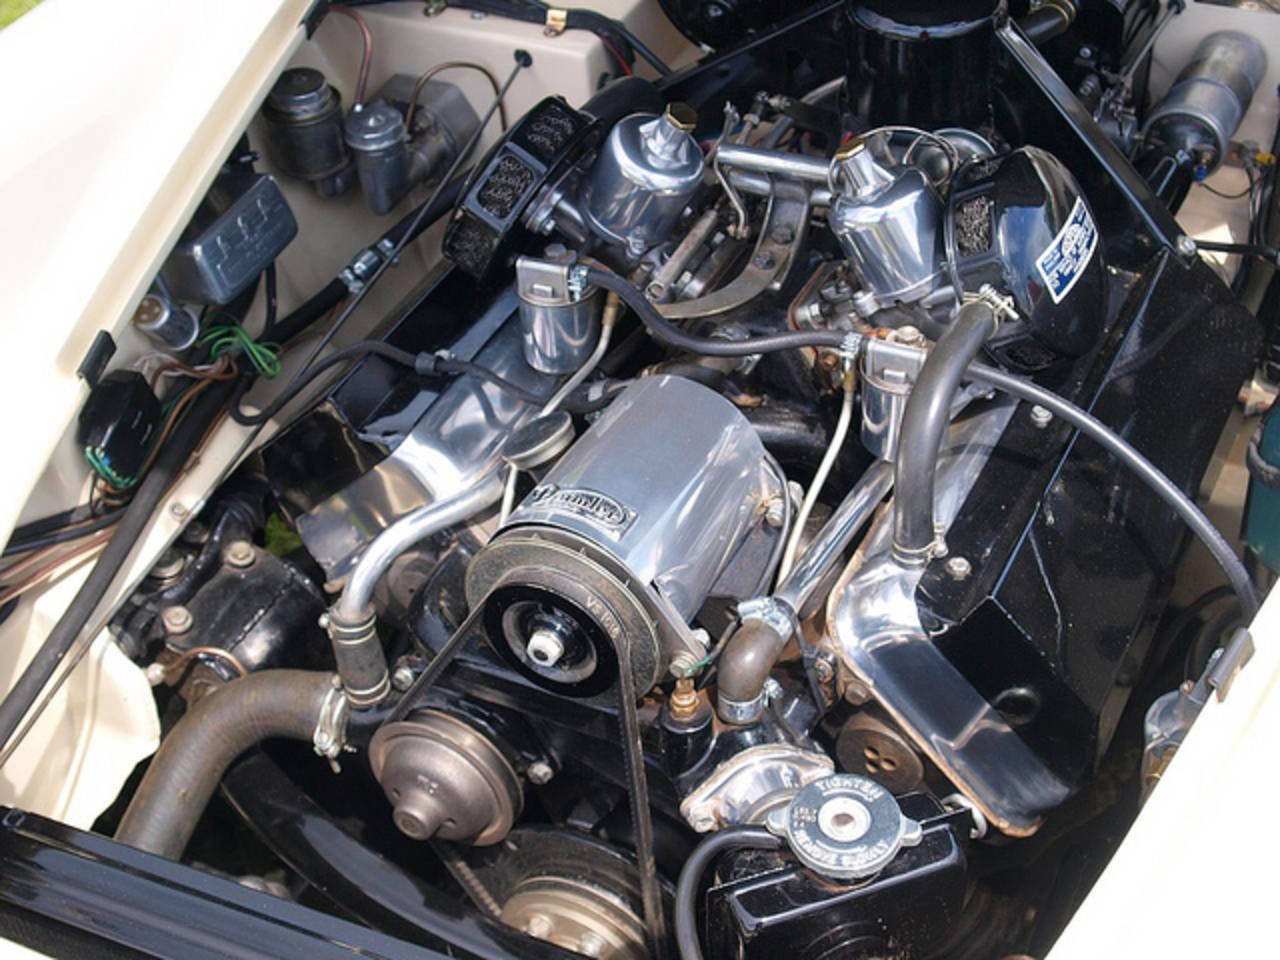 Daimler Dart SP250 Sports Car Engine - 1961 | Flickr - Photo Sharing!